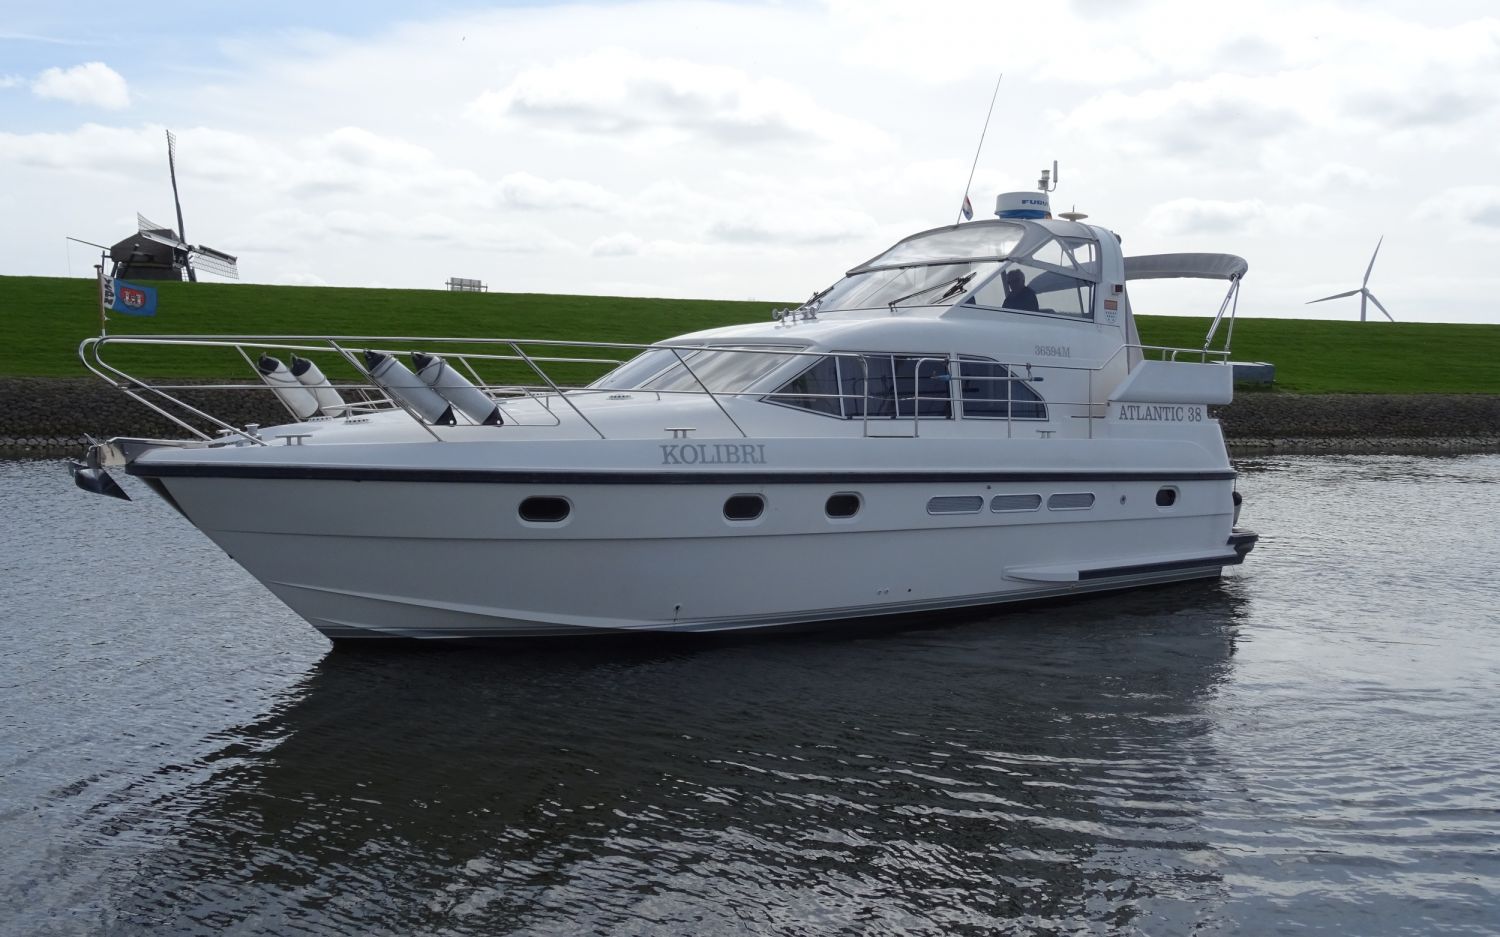 Atlantic 38, Motorjacht for sale by HollandBoat International Yachtbrokers